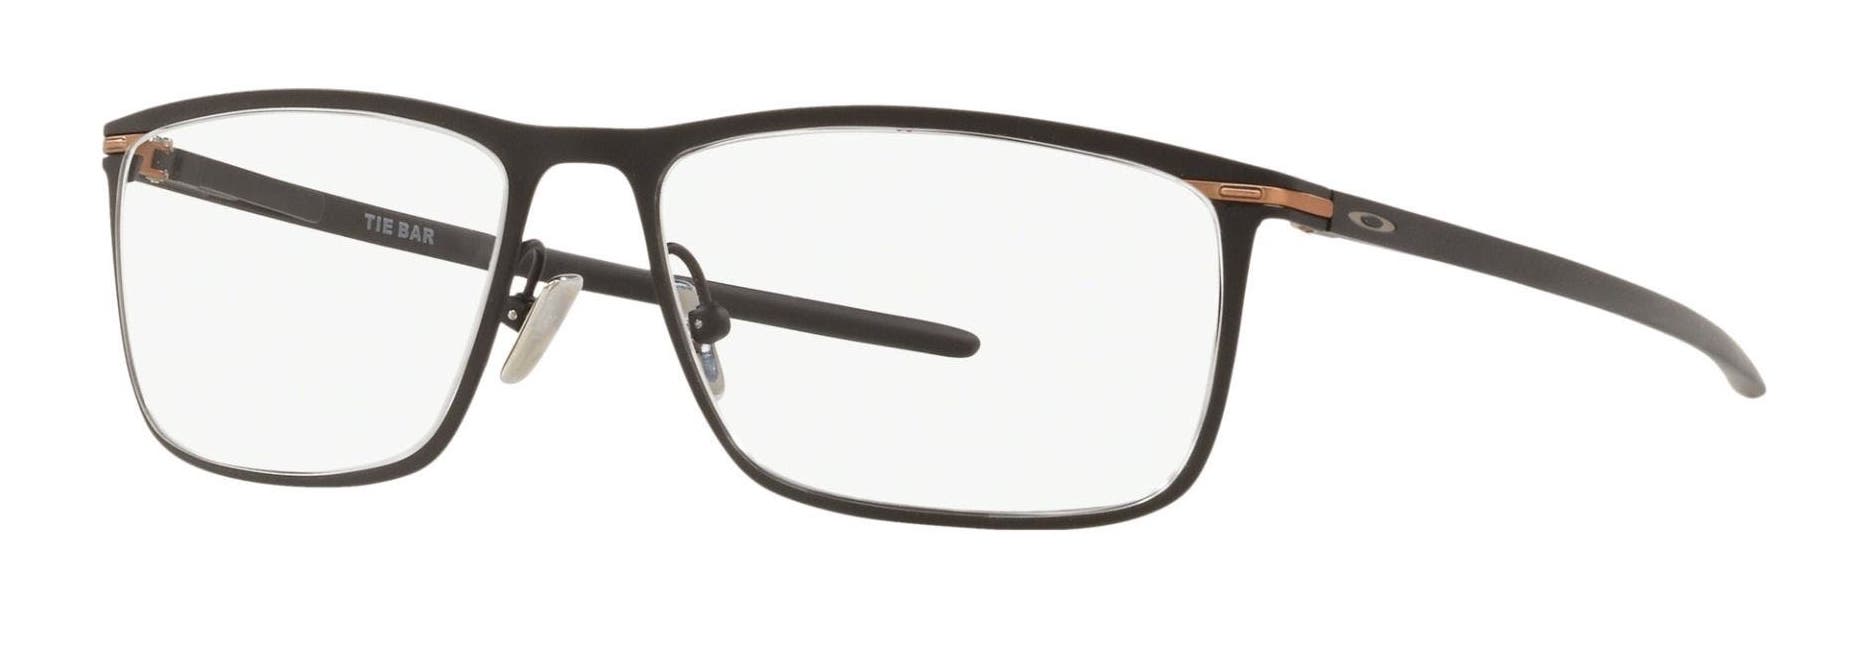 Oakley Tie Bar eyeglasses in satin black with clear rectangular lenses.